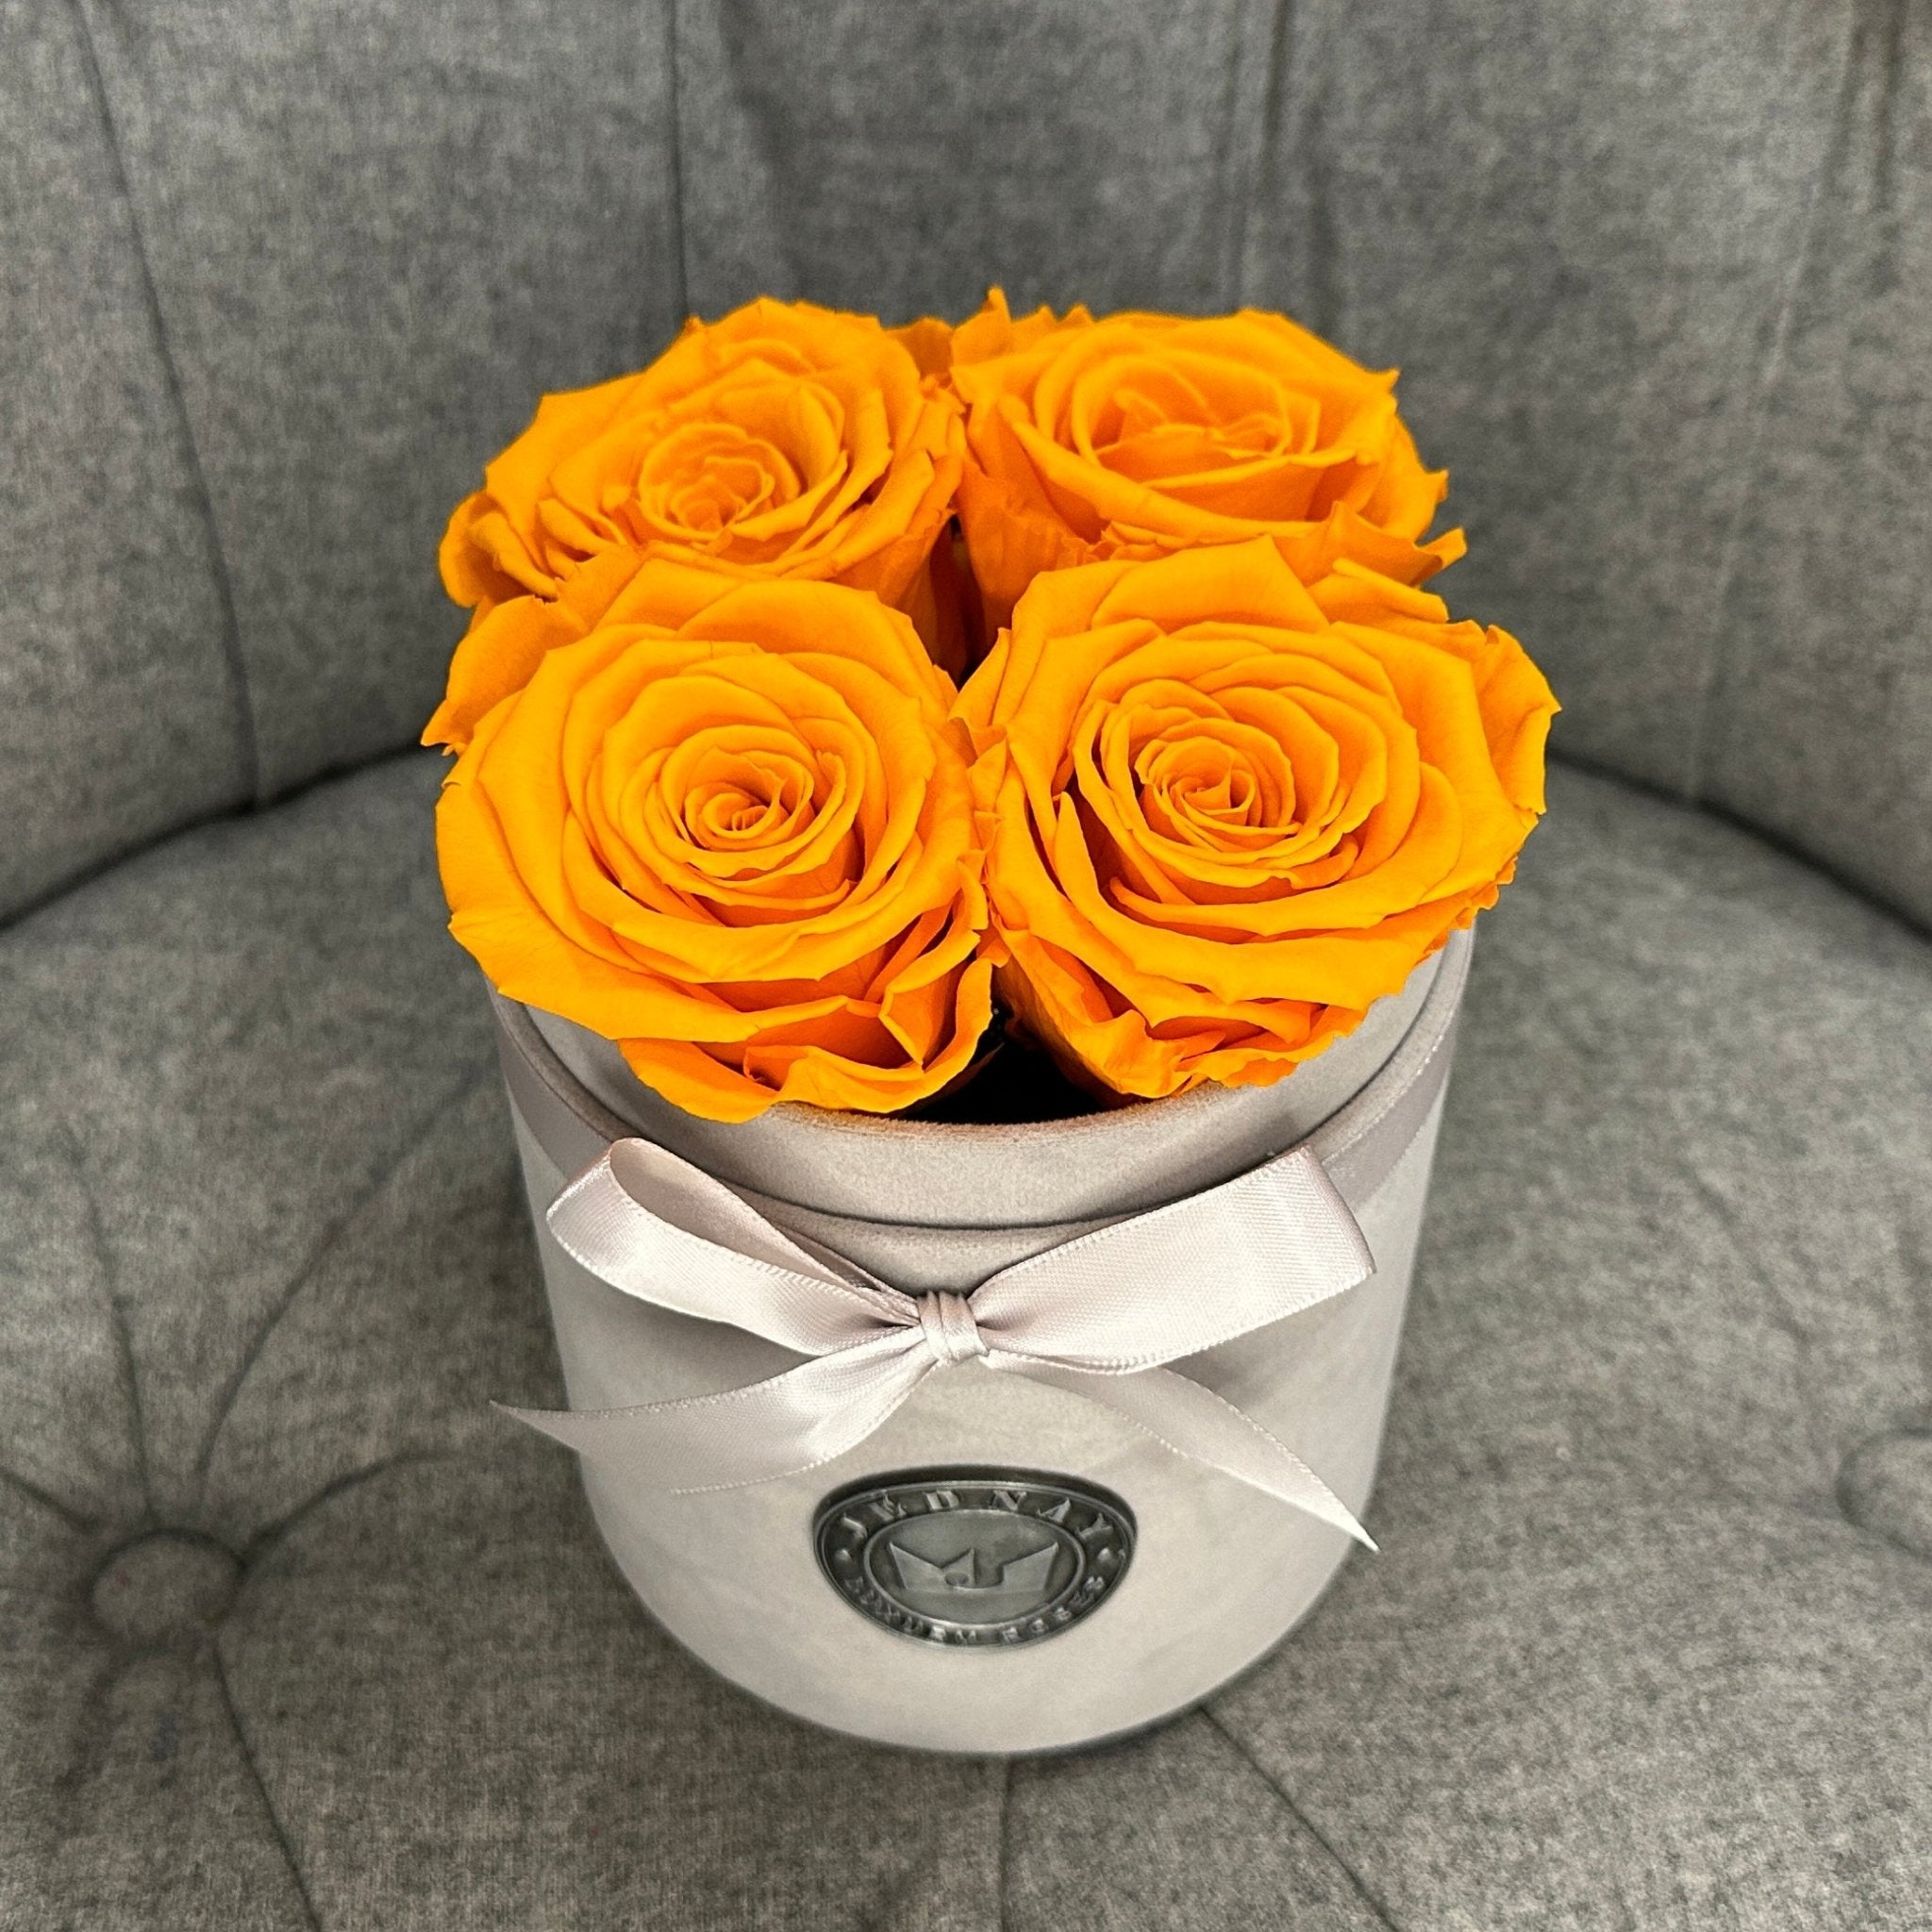 Petite Grey Suede Forever Rose Box - Sunset Orange Eternal Roses - Jednay Roses